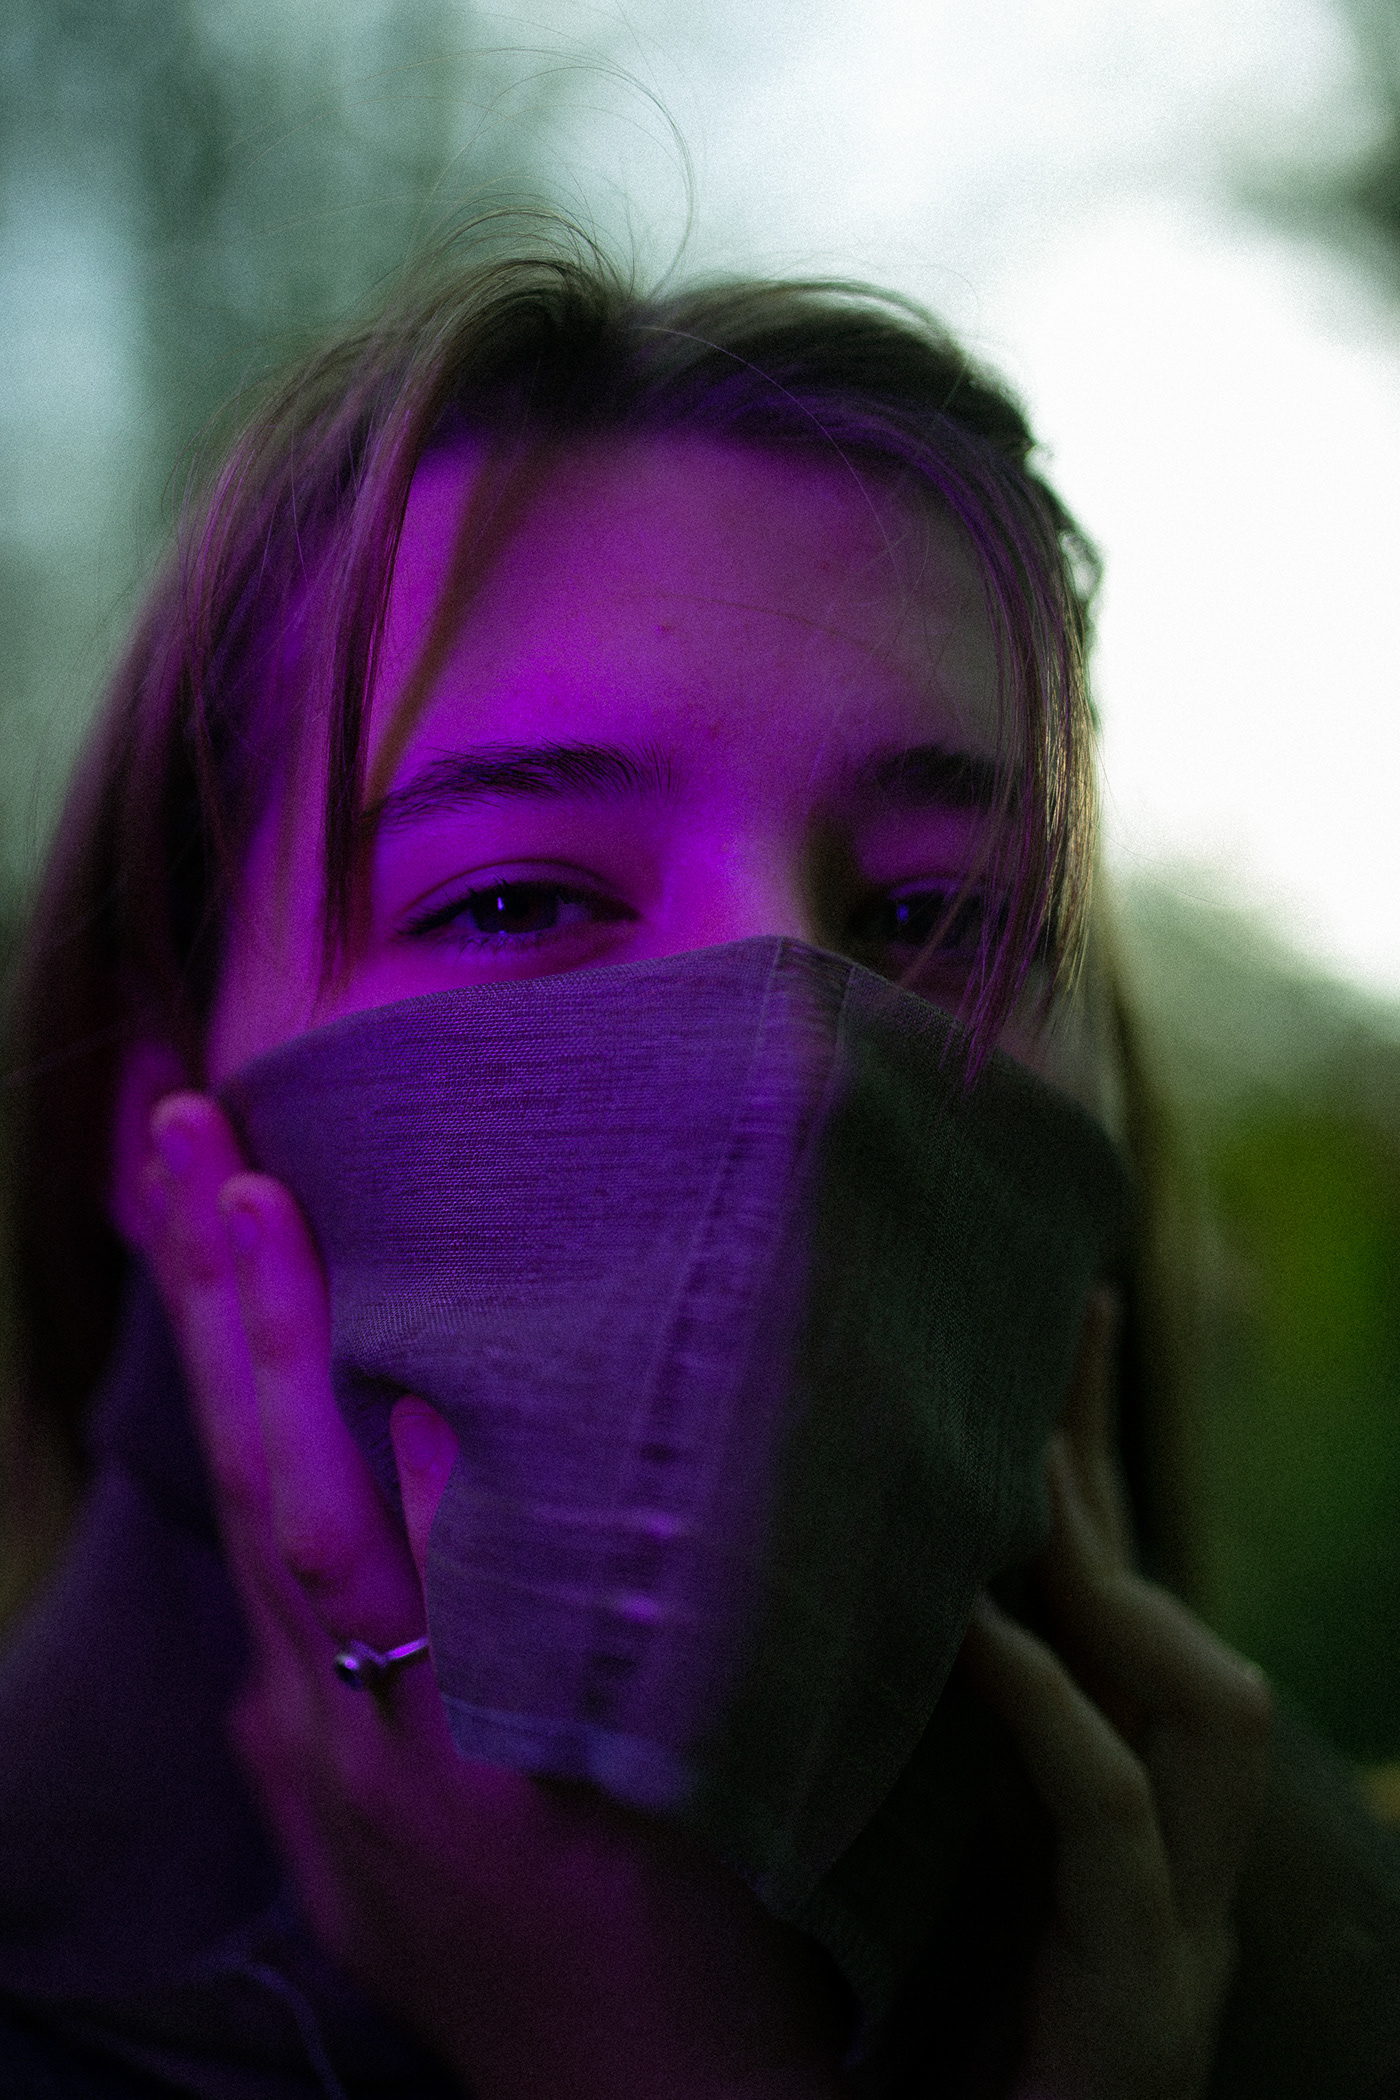 bandage blindfolded blue dark tan eyes girl girl portrait green portrait violet